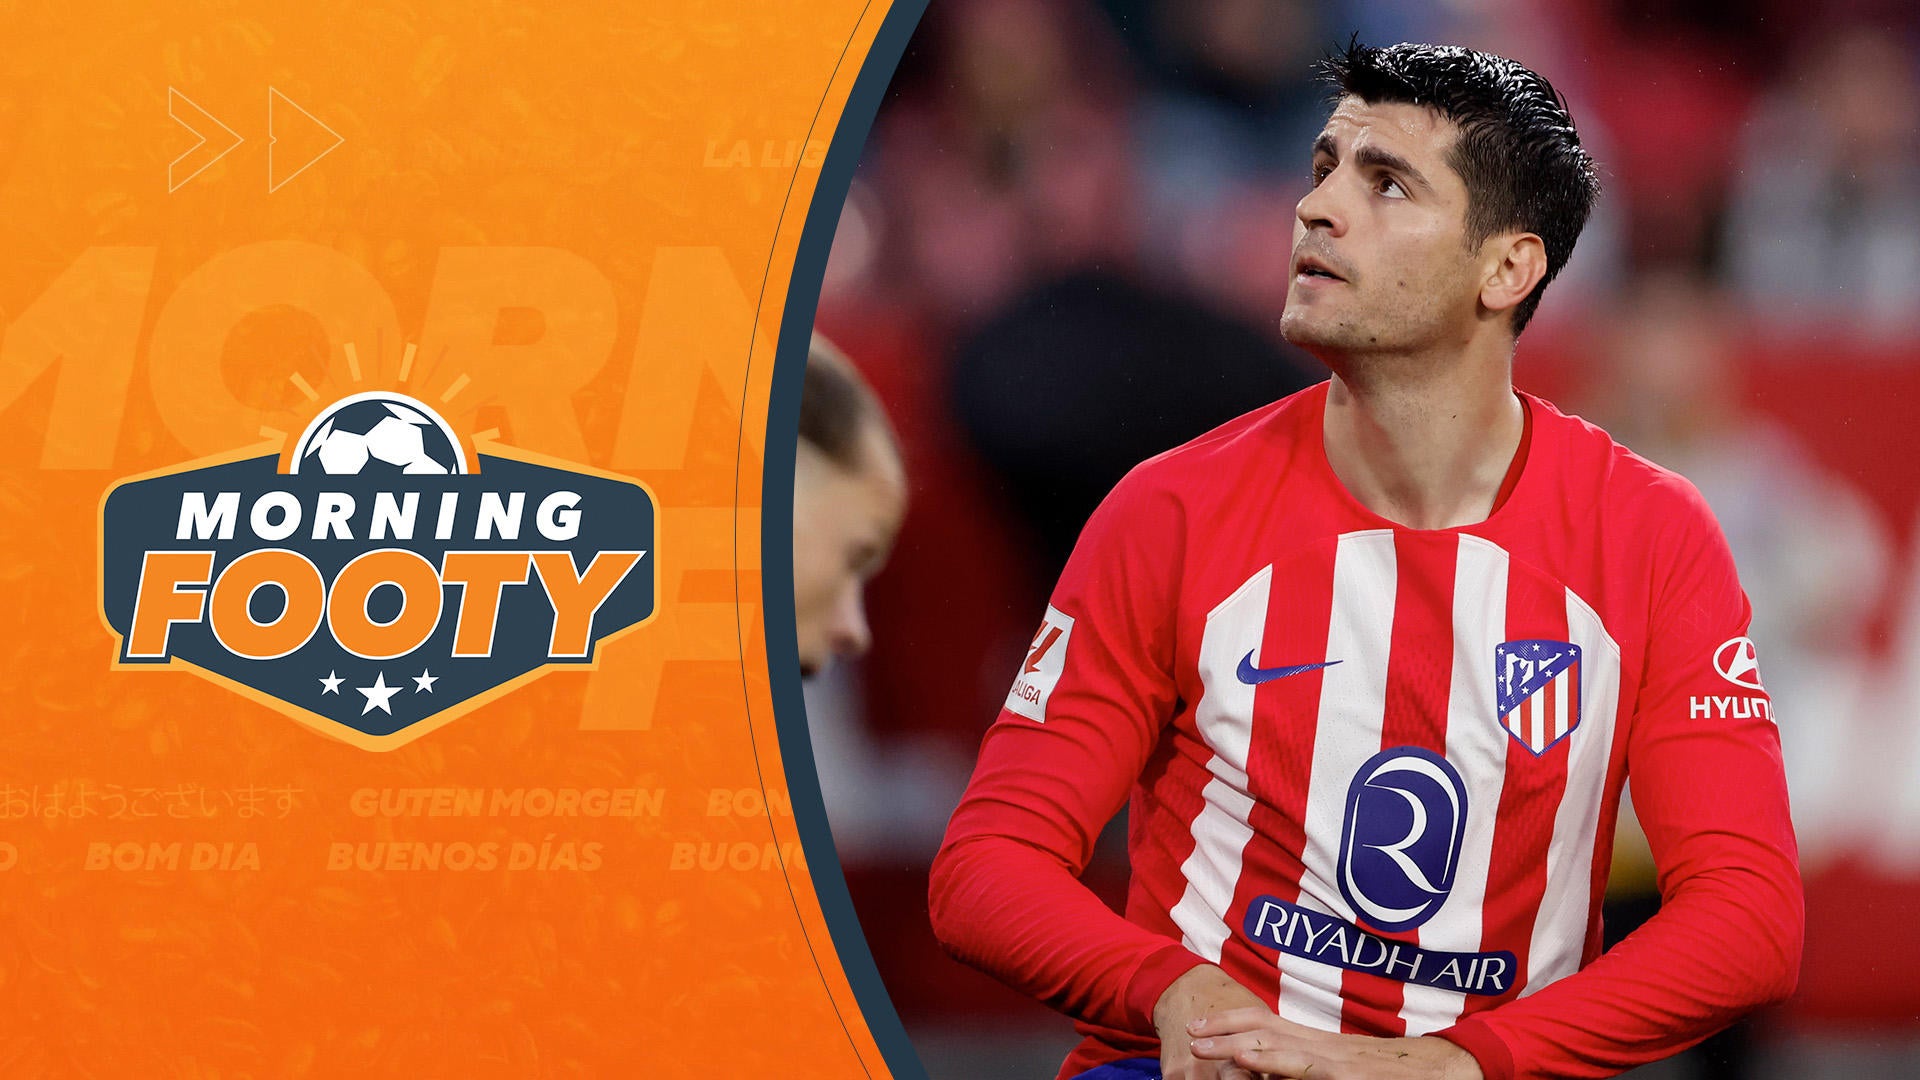 Granada - Atlético Madrid preview: Morata and Atlético eye key win